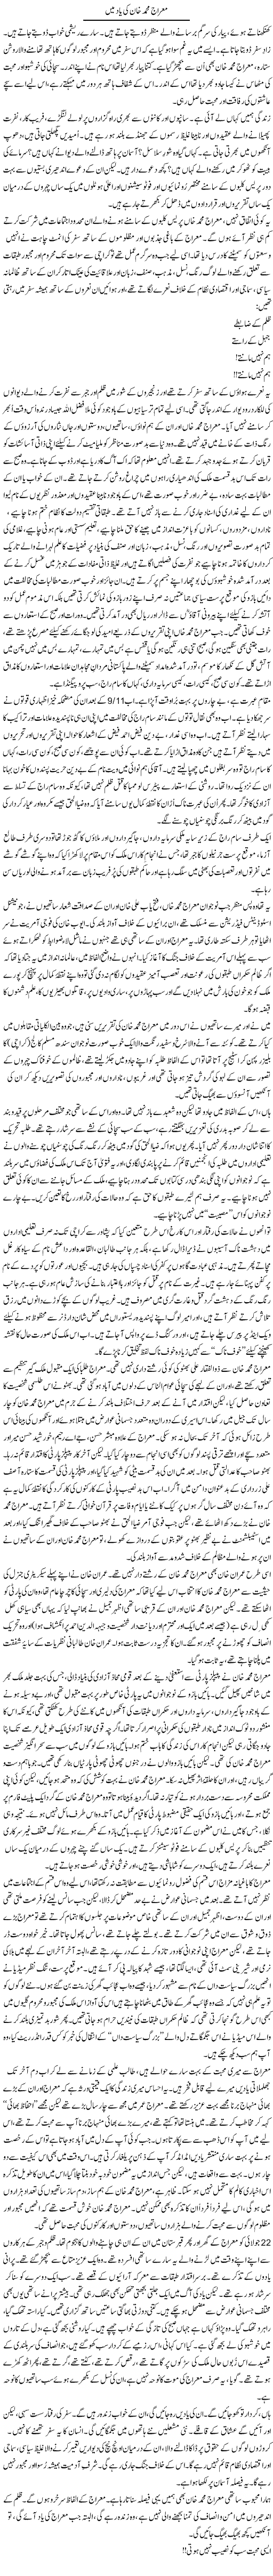 Meraj Muhammad Khan ki yaad mein | Ahfaz Ur Rahman | Daily Urdu Columns